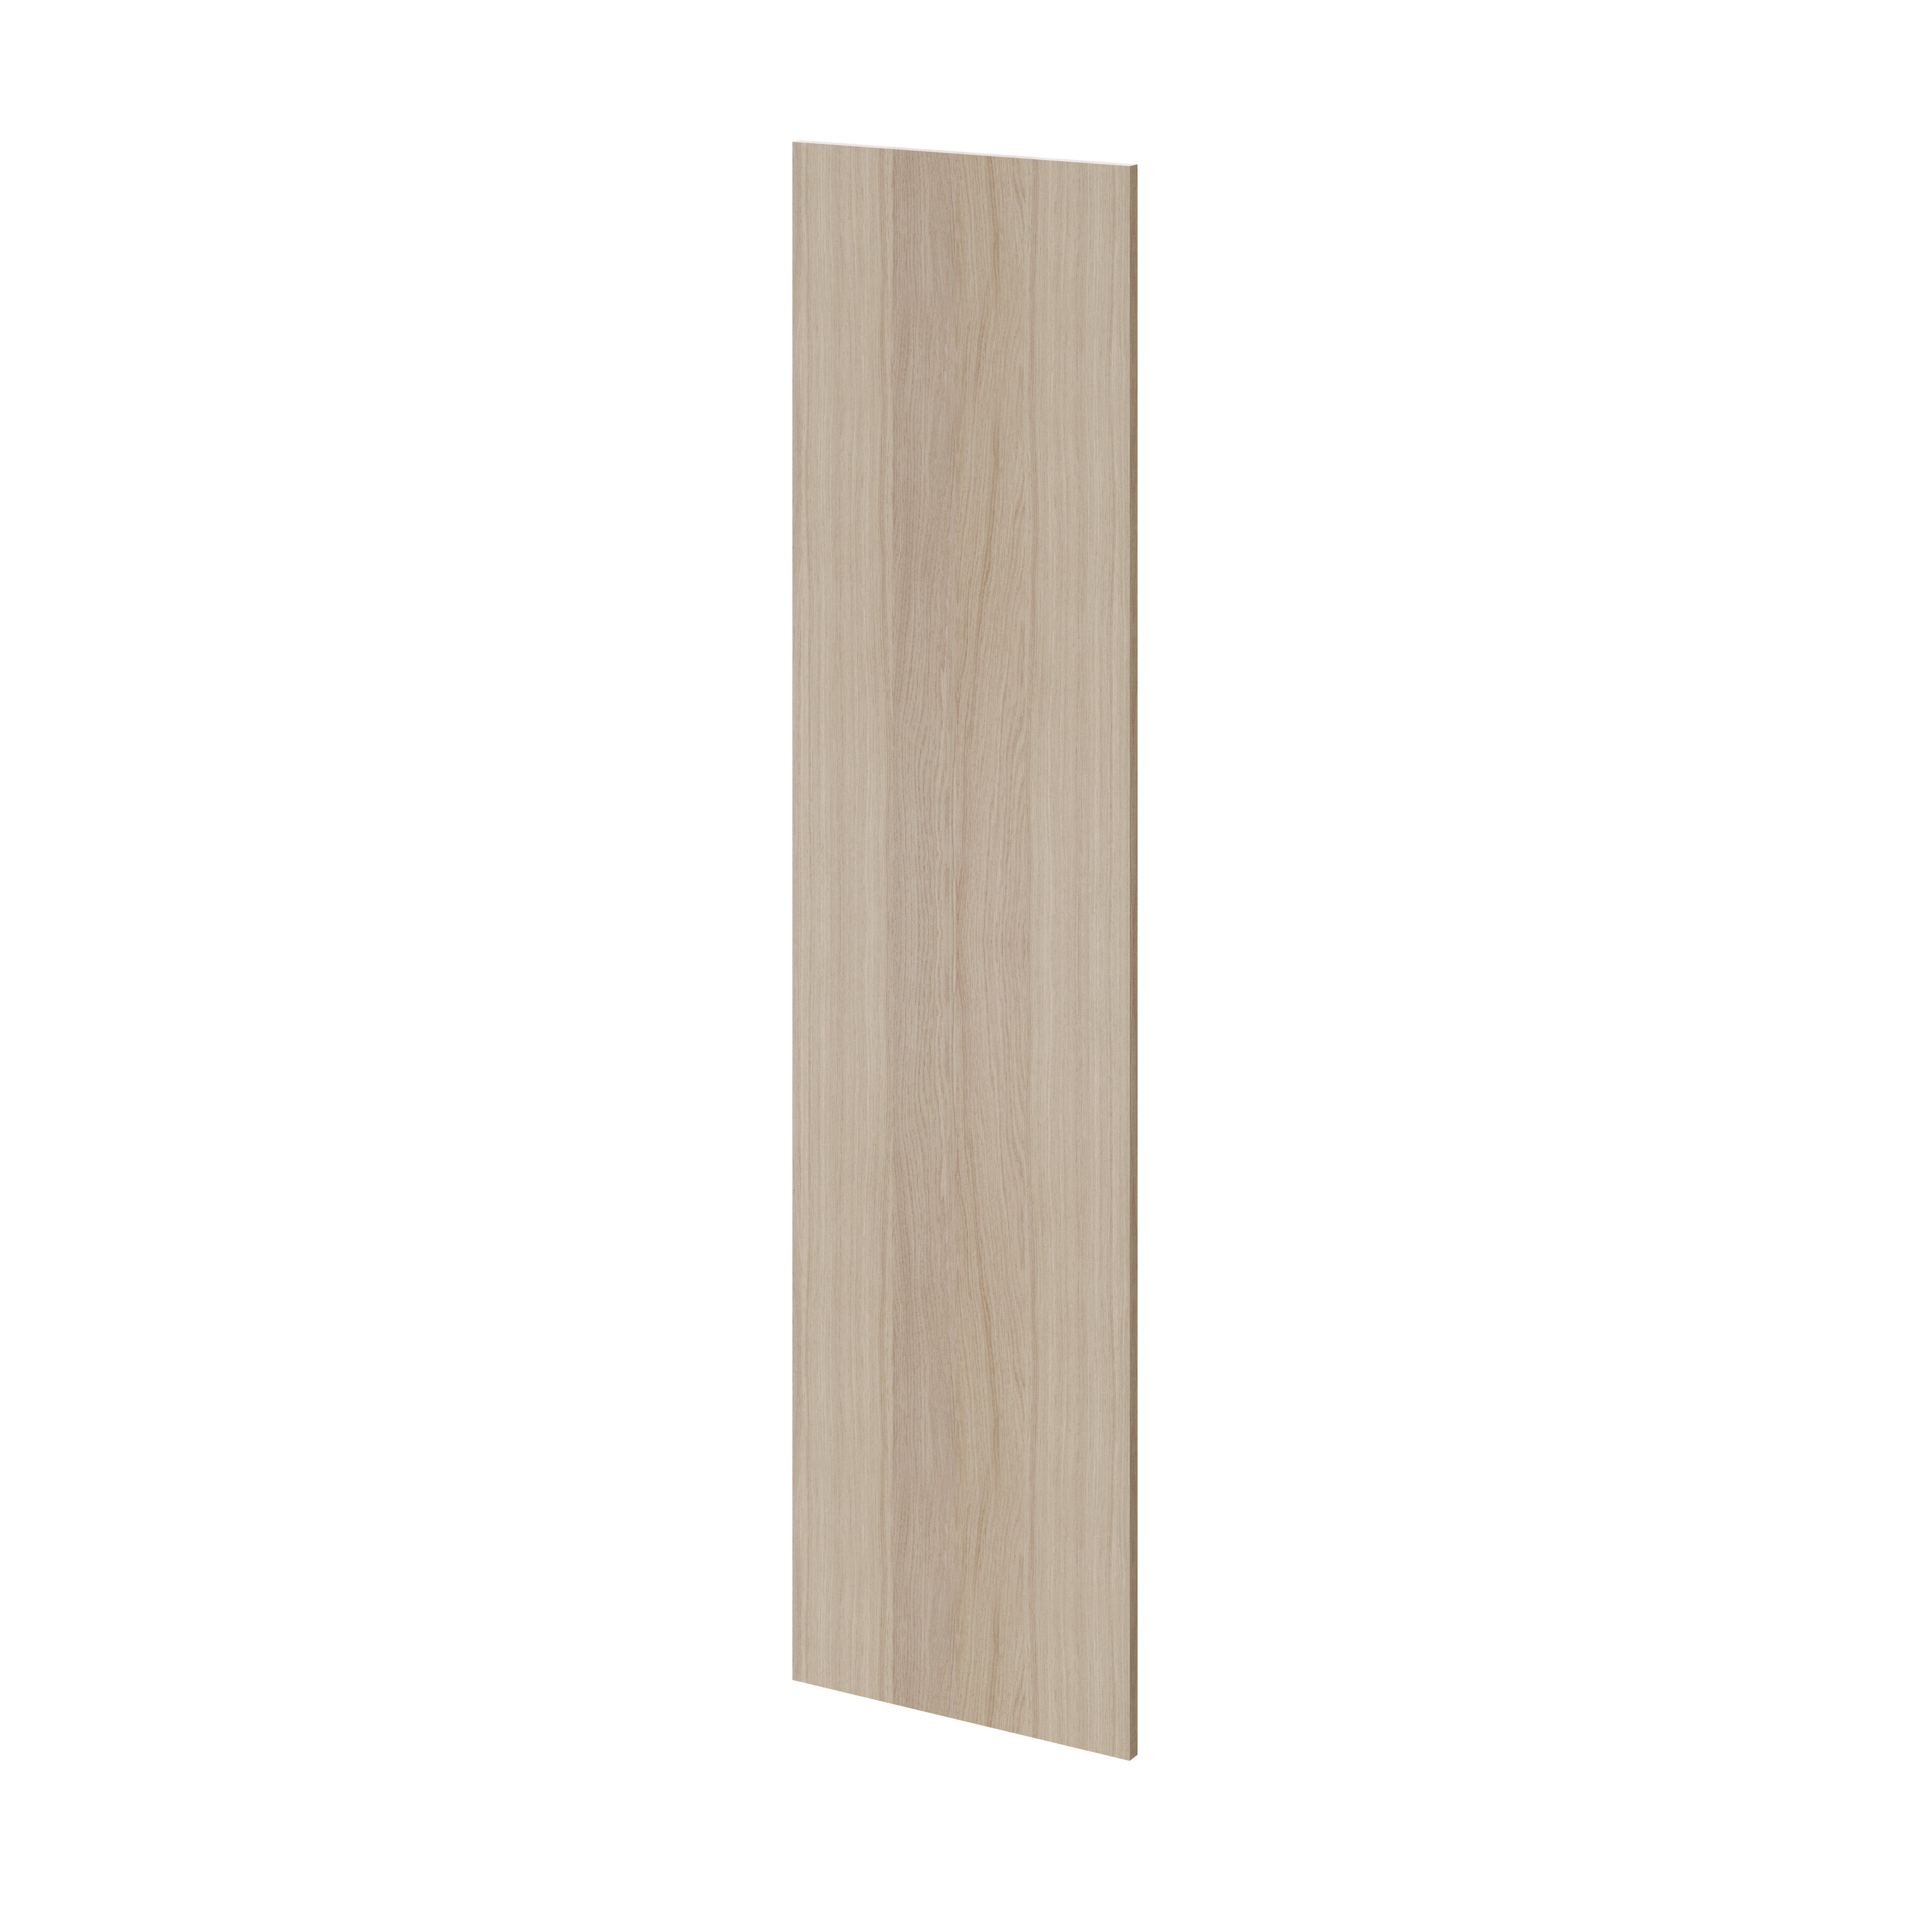 GoodHome Atomia Matt Oak effect Non-mirrored Modular furniture door, (H) 1497mm (W) 372mm